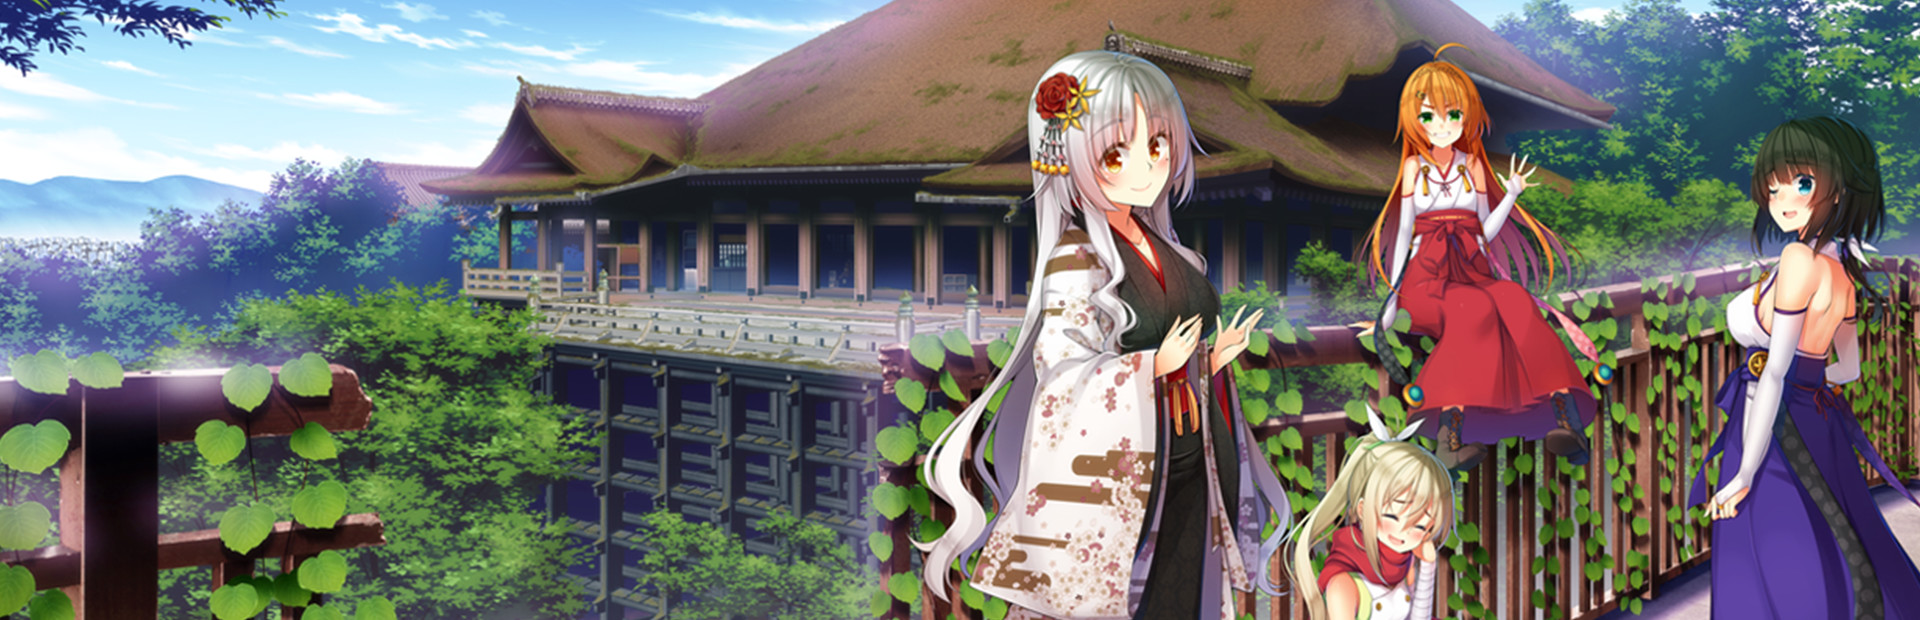 Ne no Kami - The Two Princess Knights of Kyoto Part 2 cover image